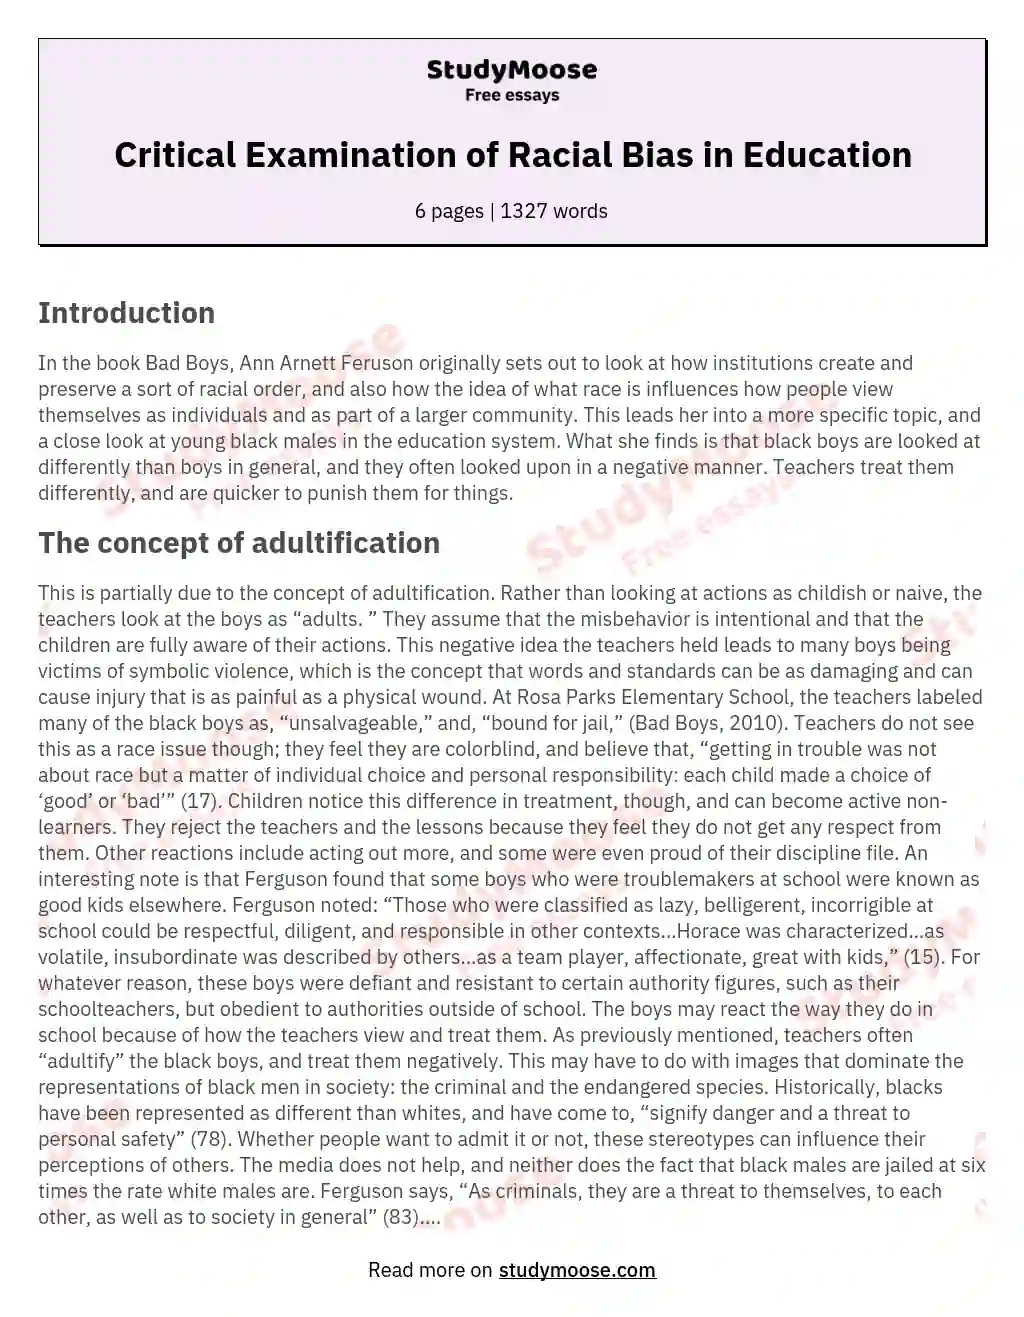 Critical Examination of Racial Bias in Education essay